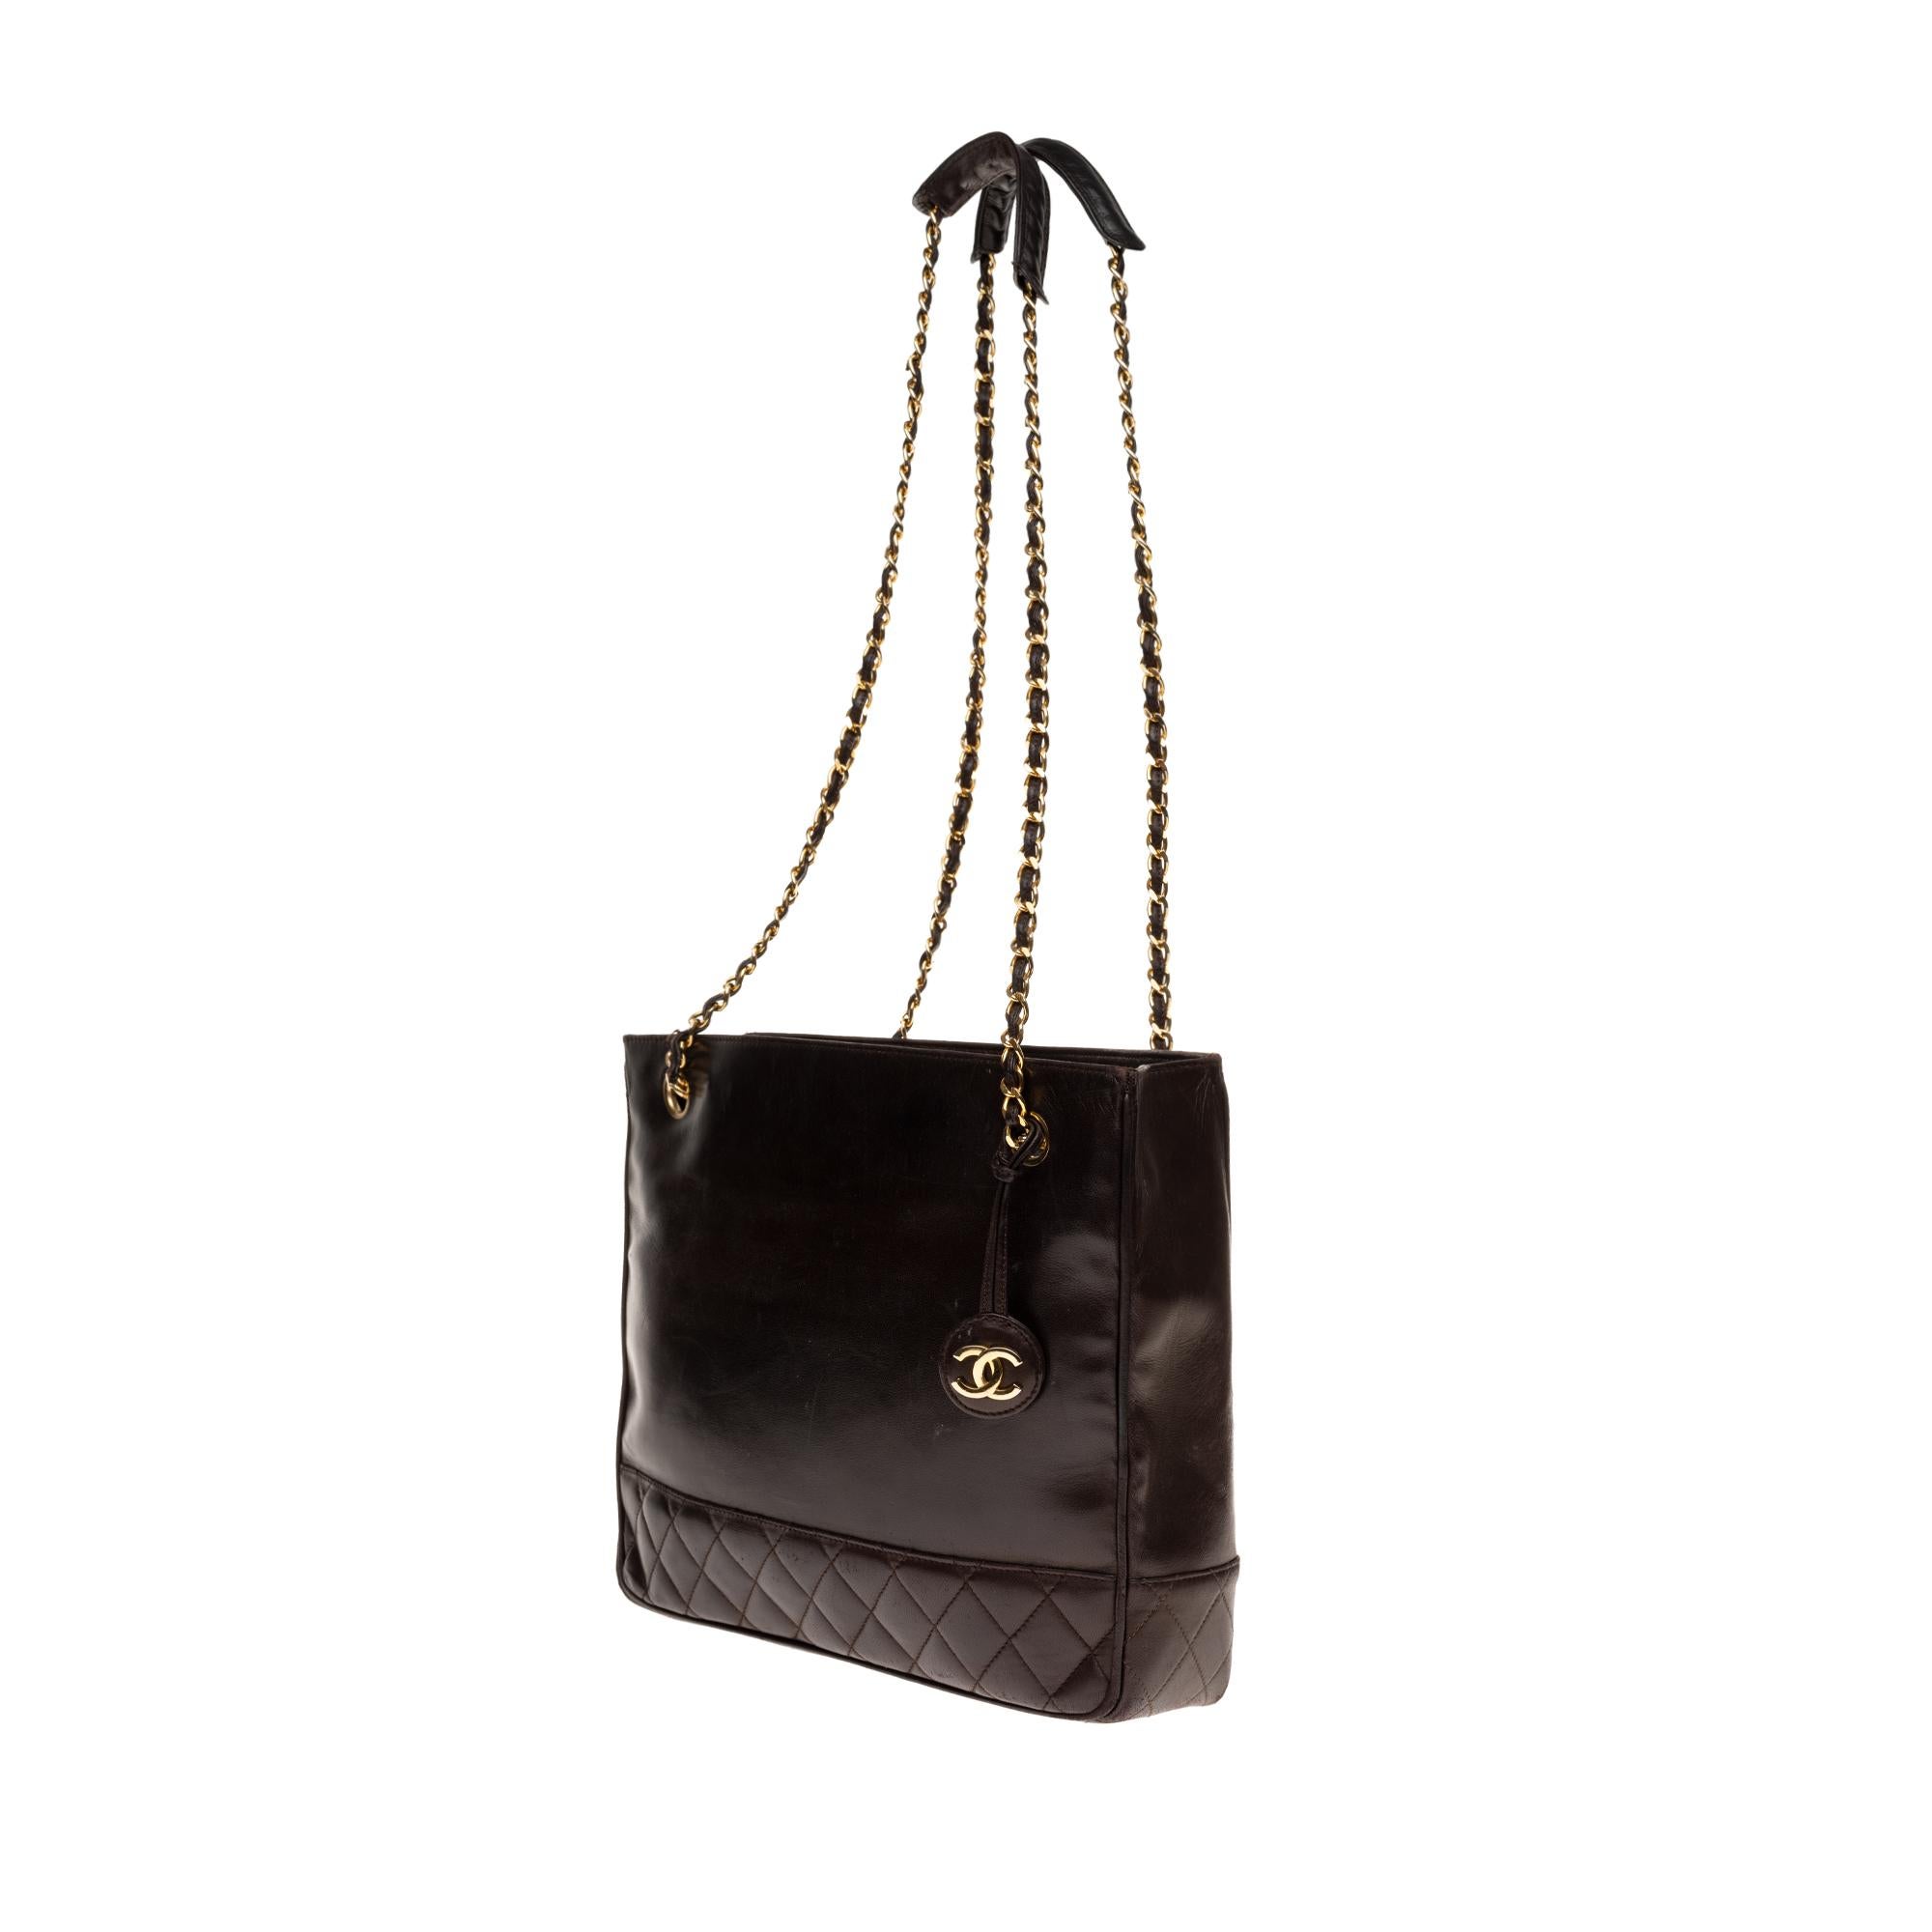 Black Chanel Tote bag in brown lambskin, gold hardware !